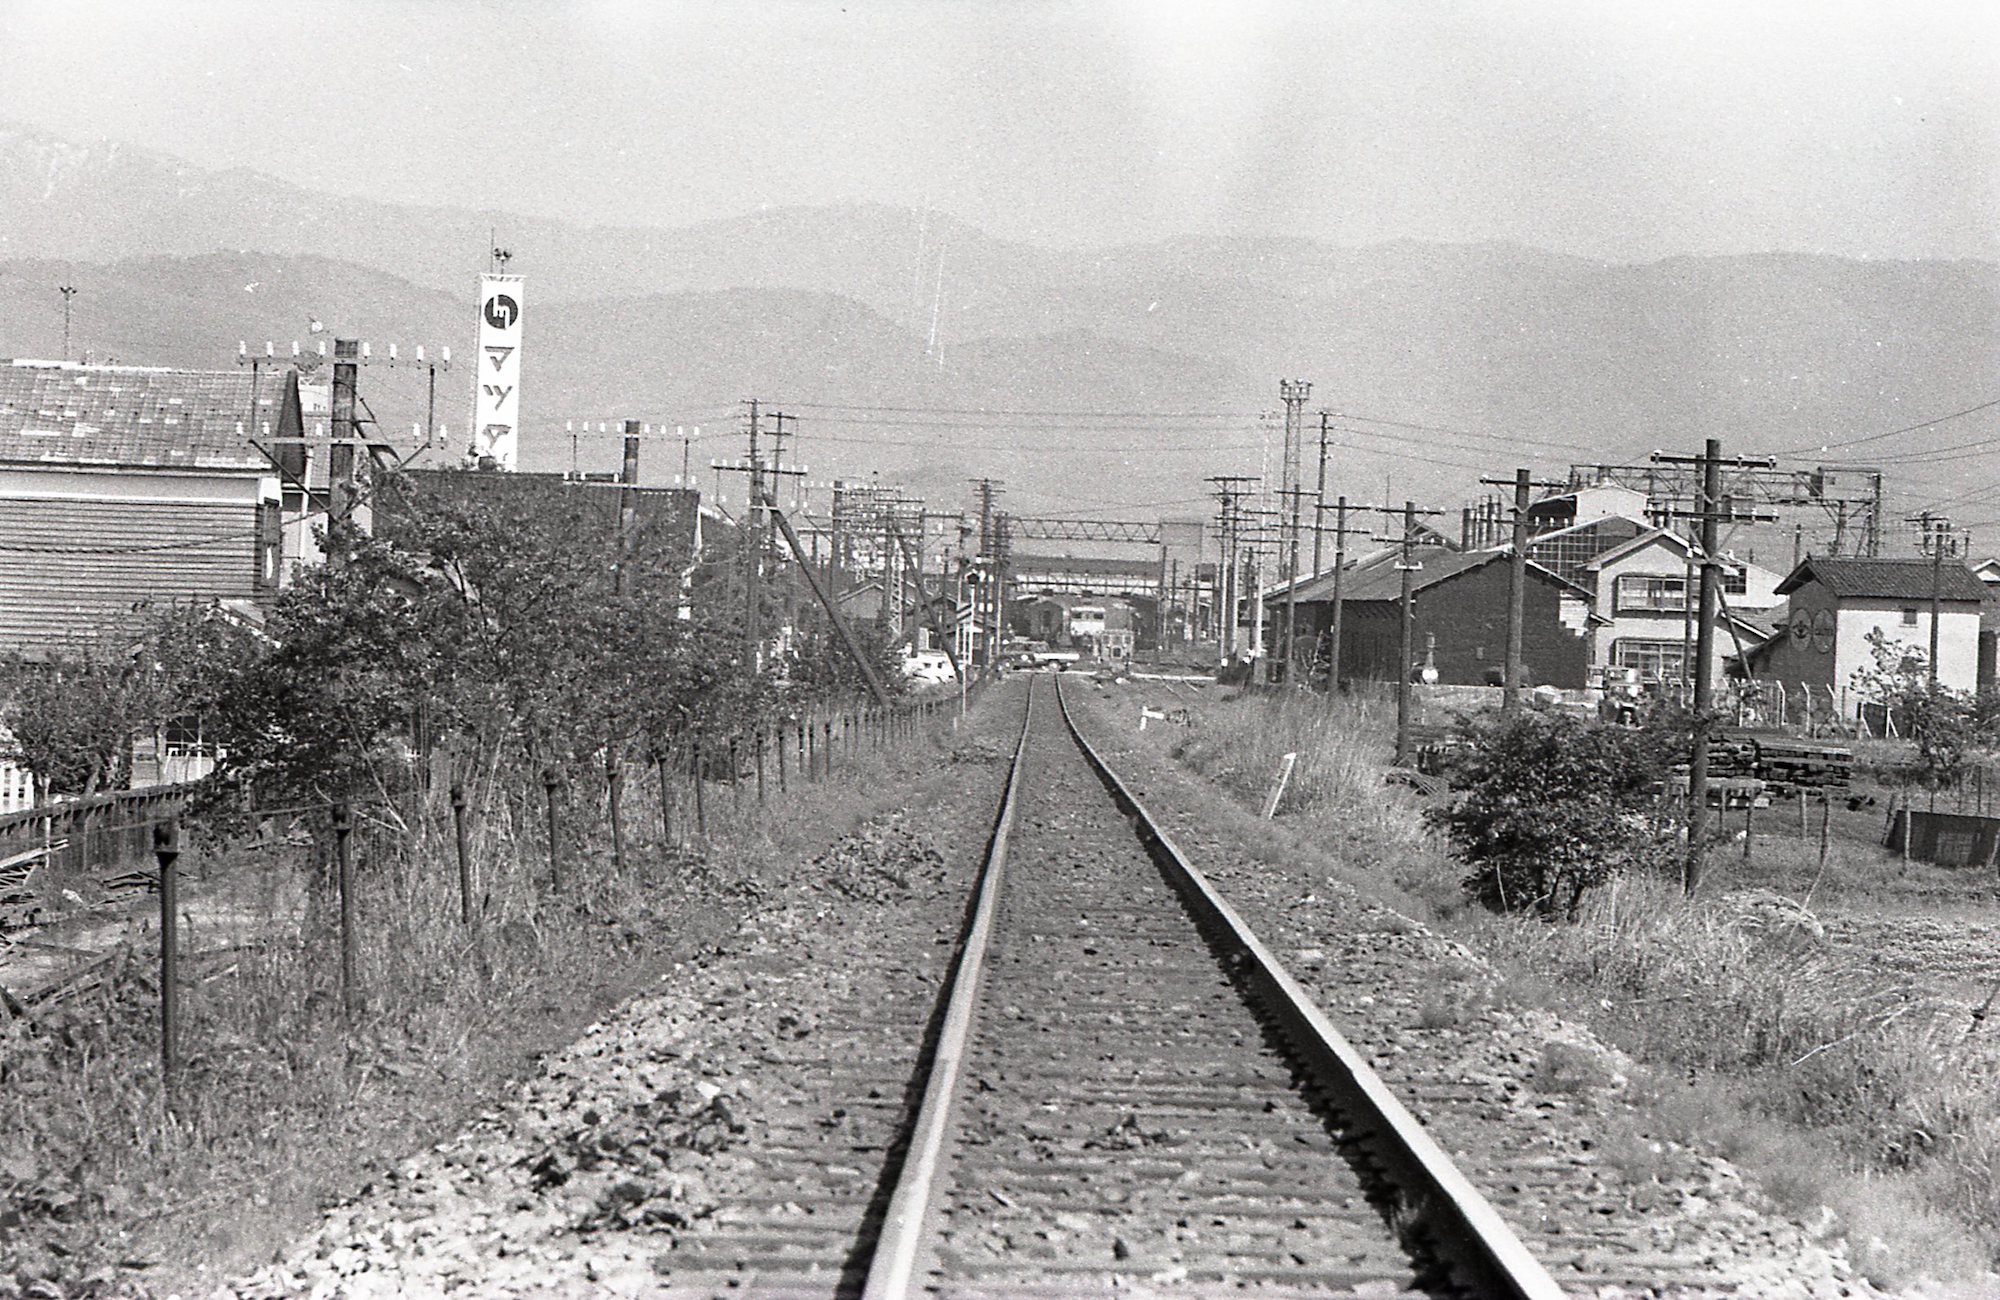 鳥取市民病院の建設風景 / 山陰線の線路 / 棒鼻踏切の混雑風景's image 2